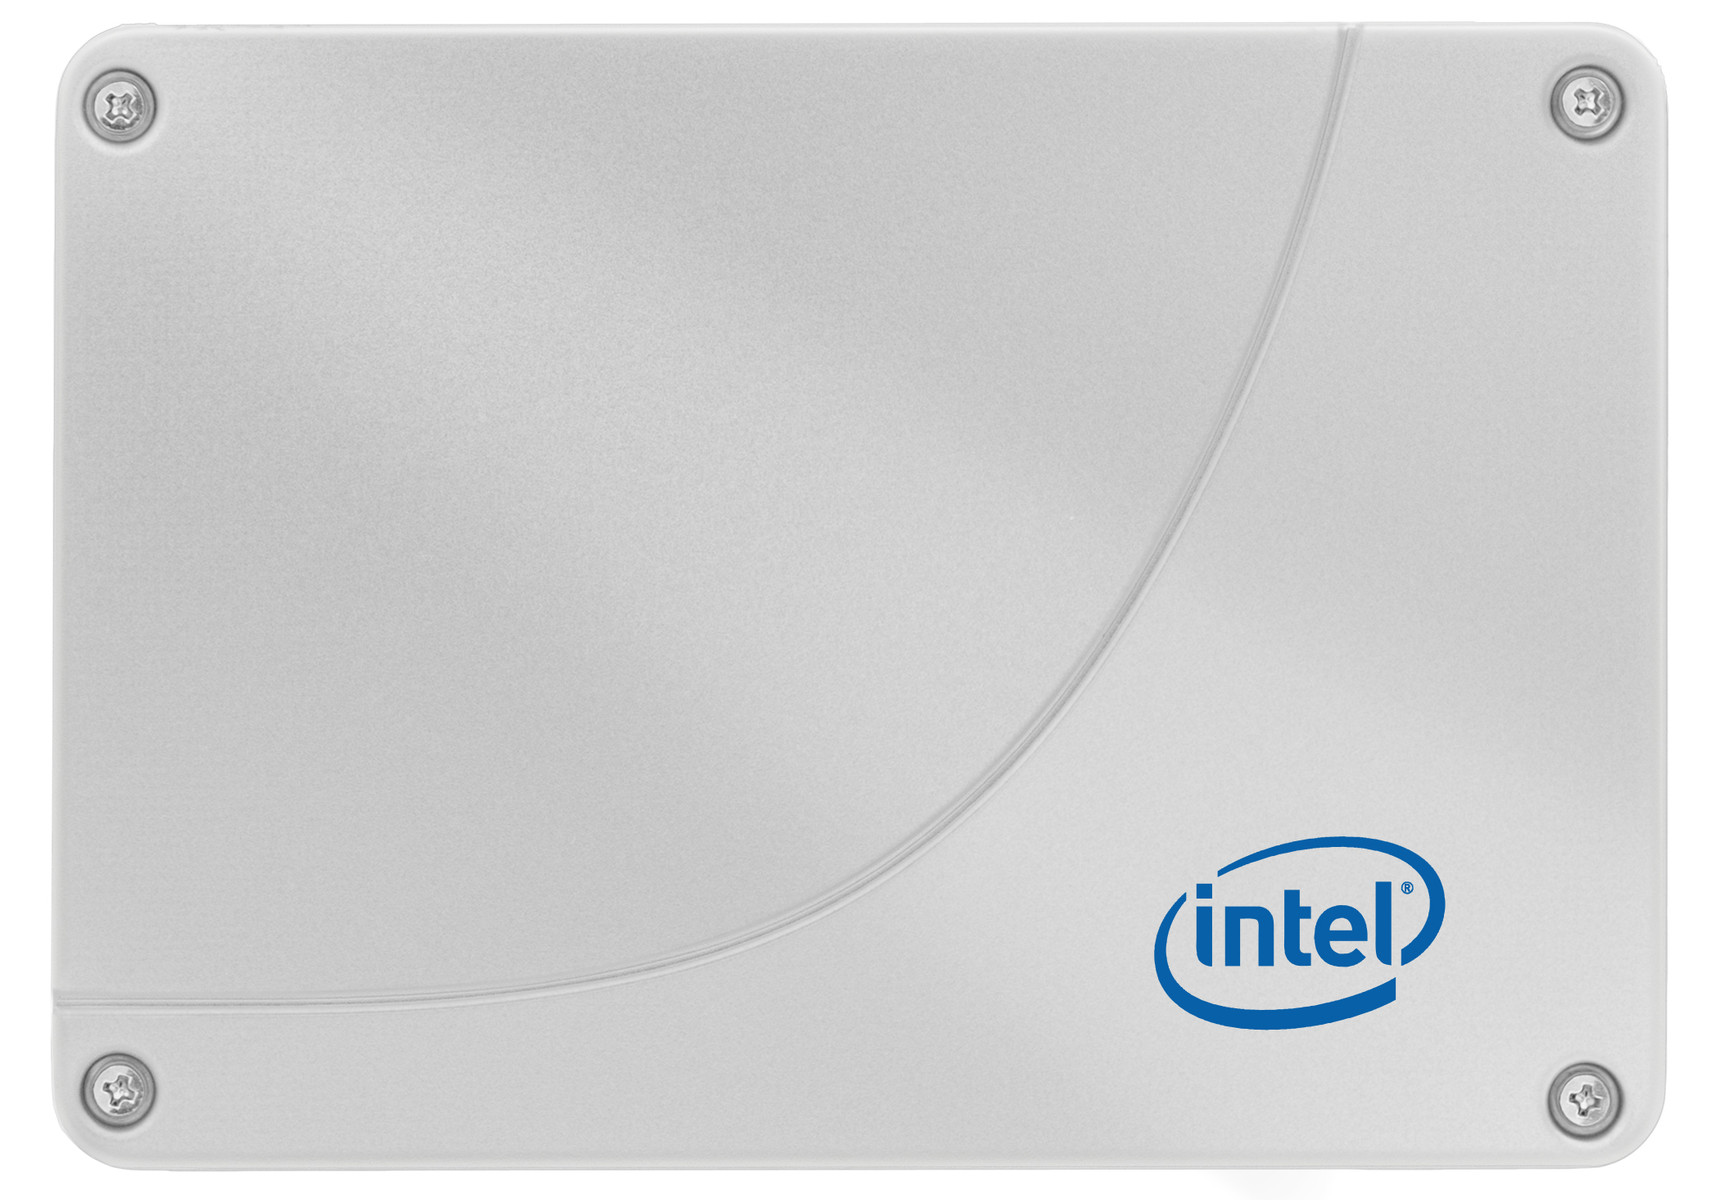 Review Intel 520 Series 240 GB SSD -